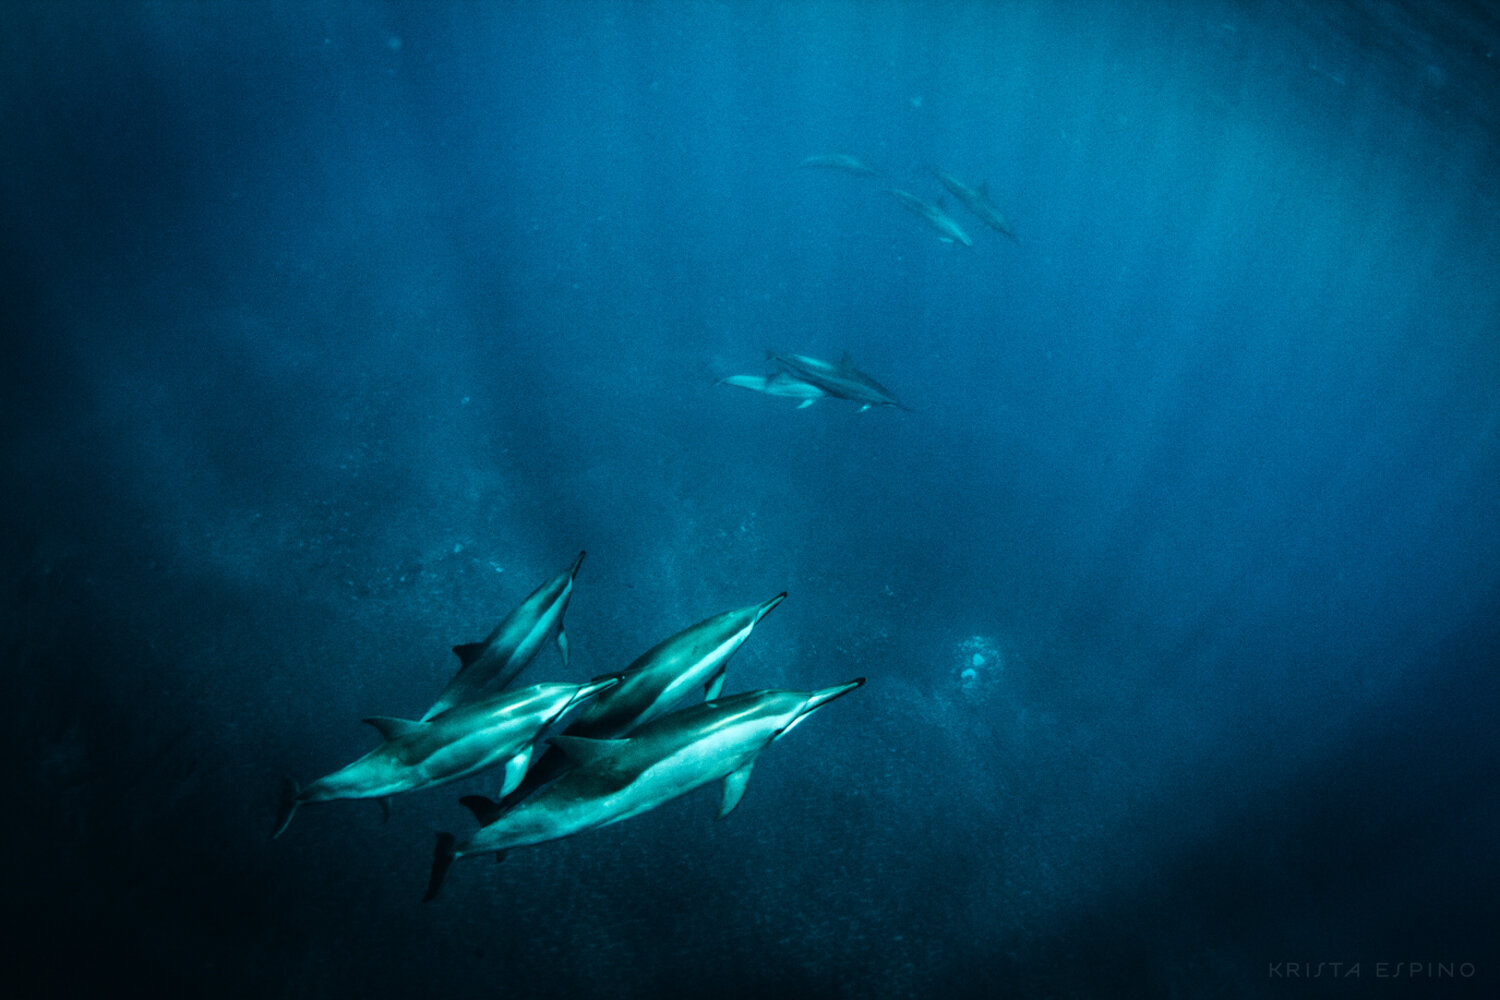 dolphin eco tour wild wildlife sealife lifestyle nature photography photographer krista espino travel underwater swim ocean big island hawaii kona dolphins_-22.jpg